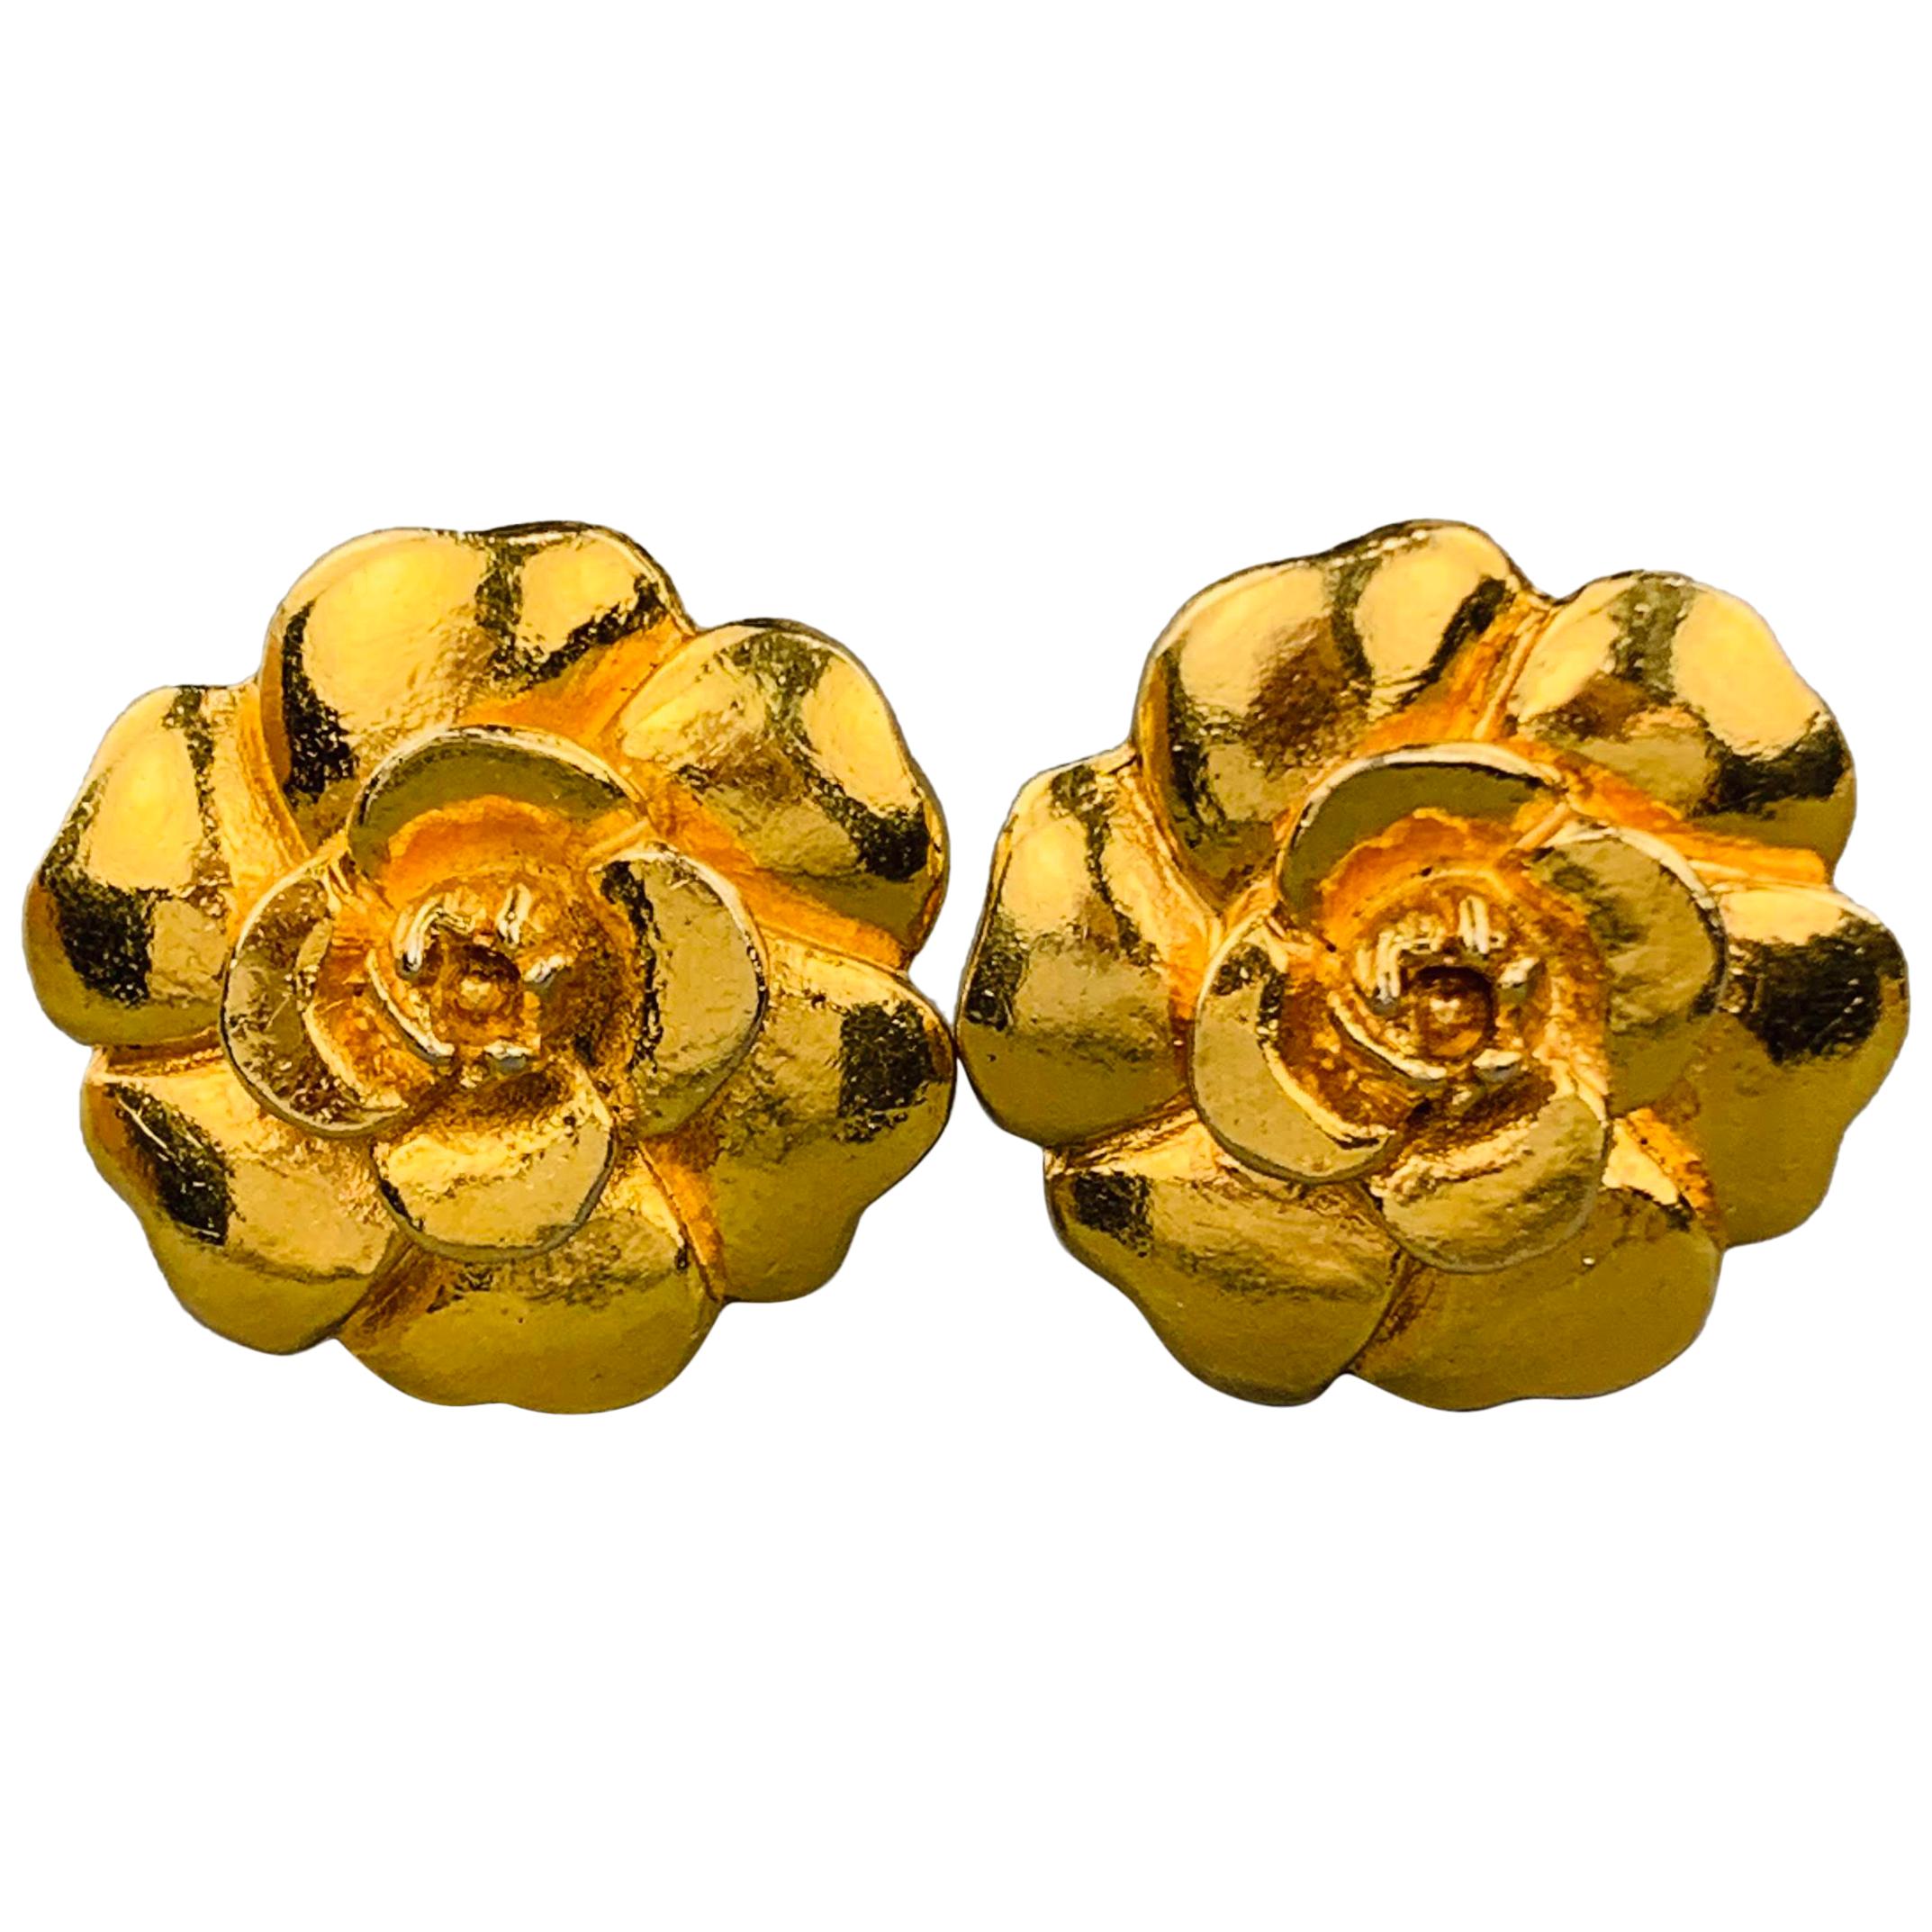 Camellia Jewelry Stud Earrings  Camellia Design Stud Earrings